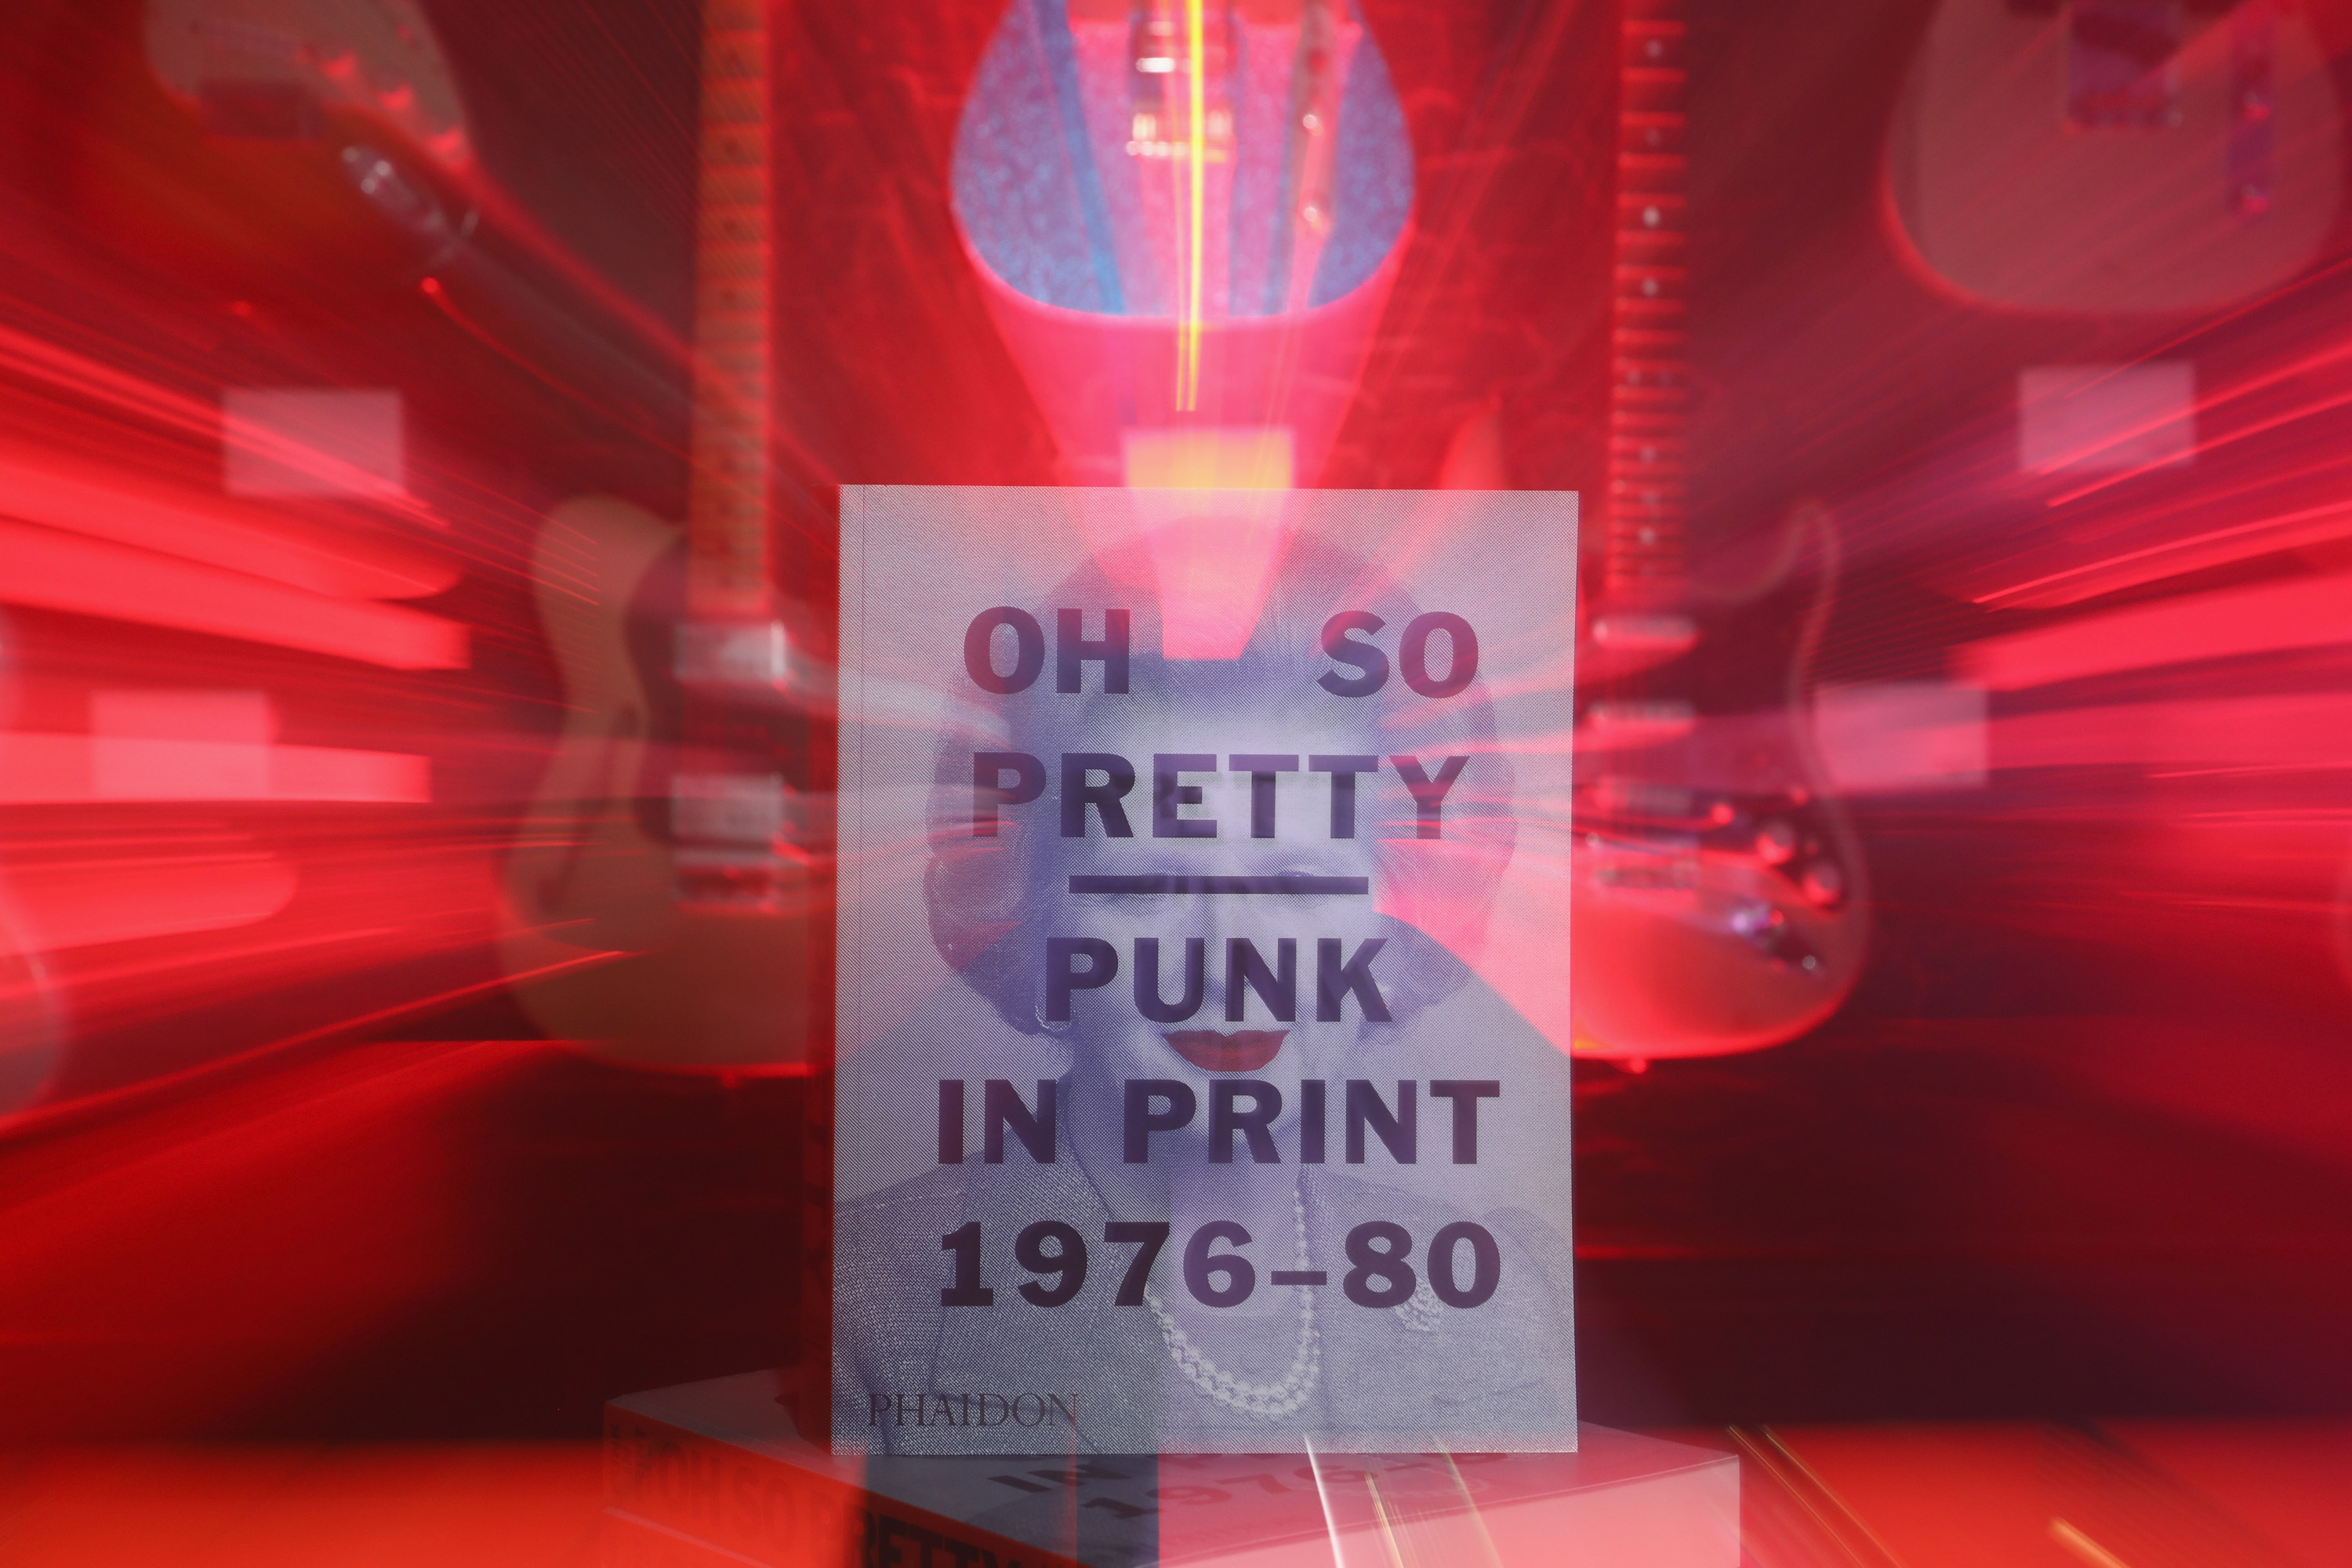 Oh So Pretty Punk In Print 1976-80 display at John Varvatos